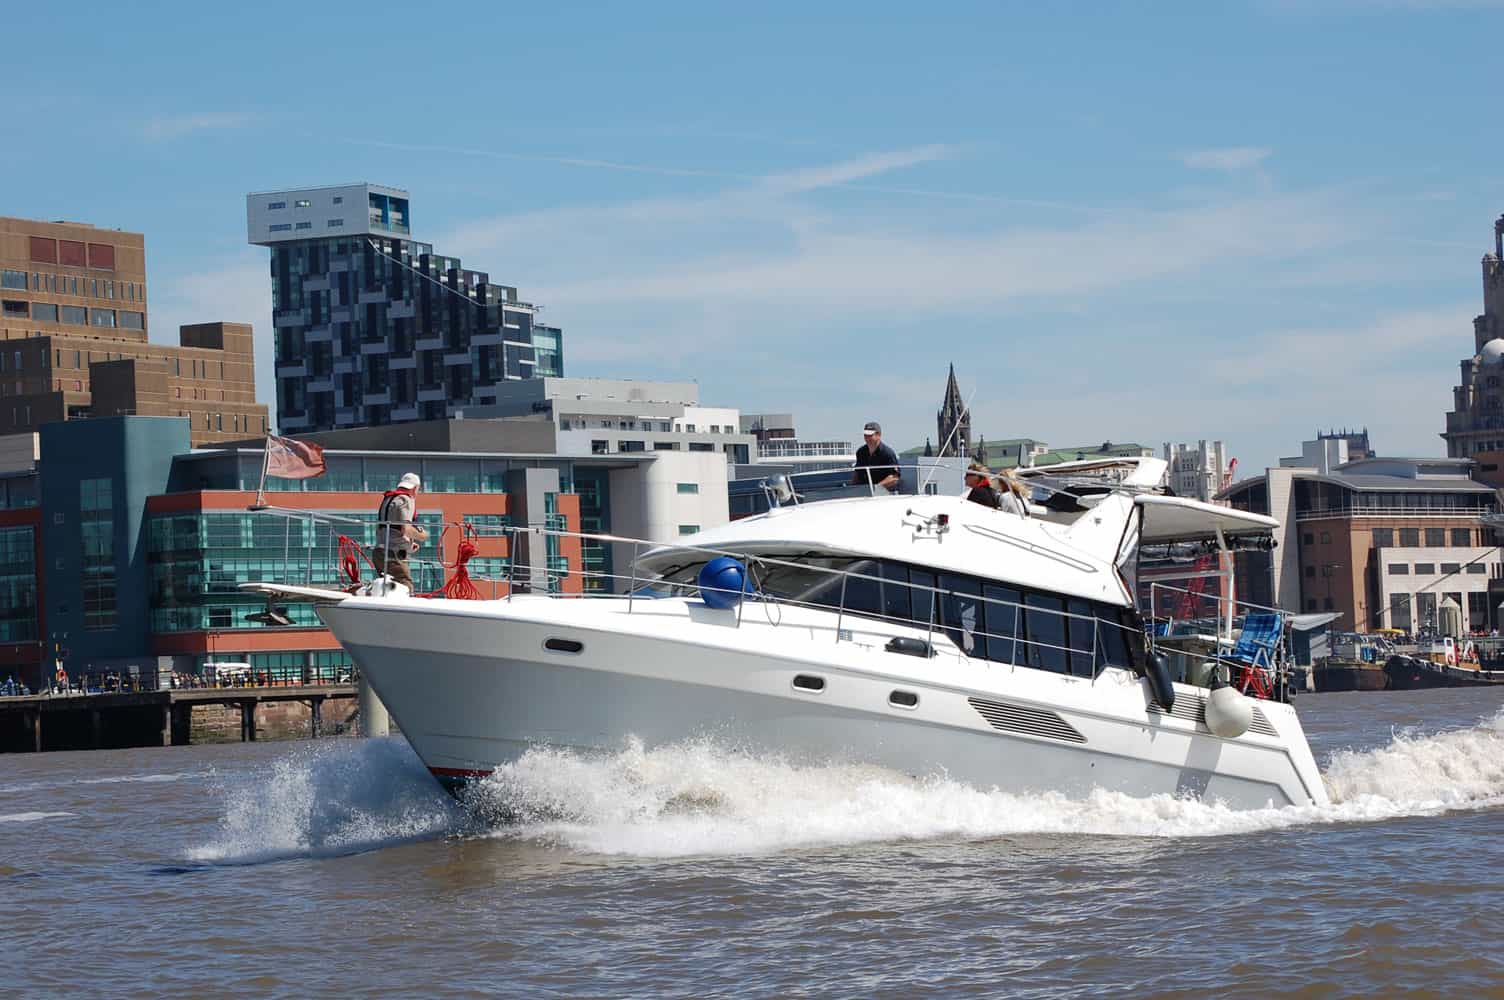 yachtmaster theory london